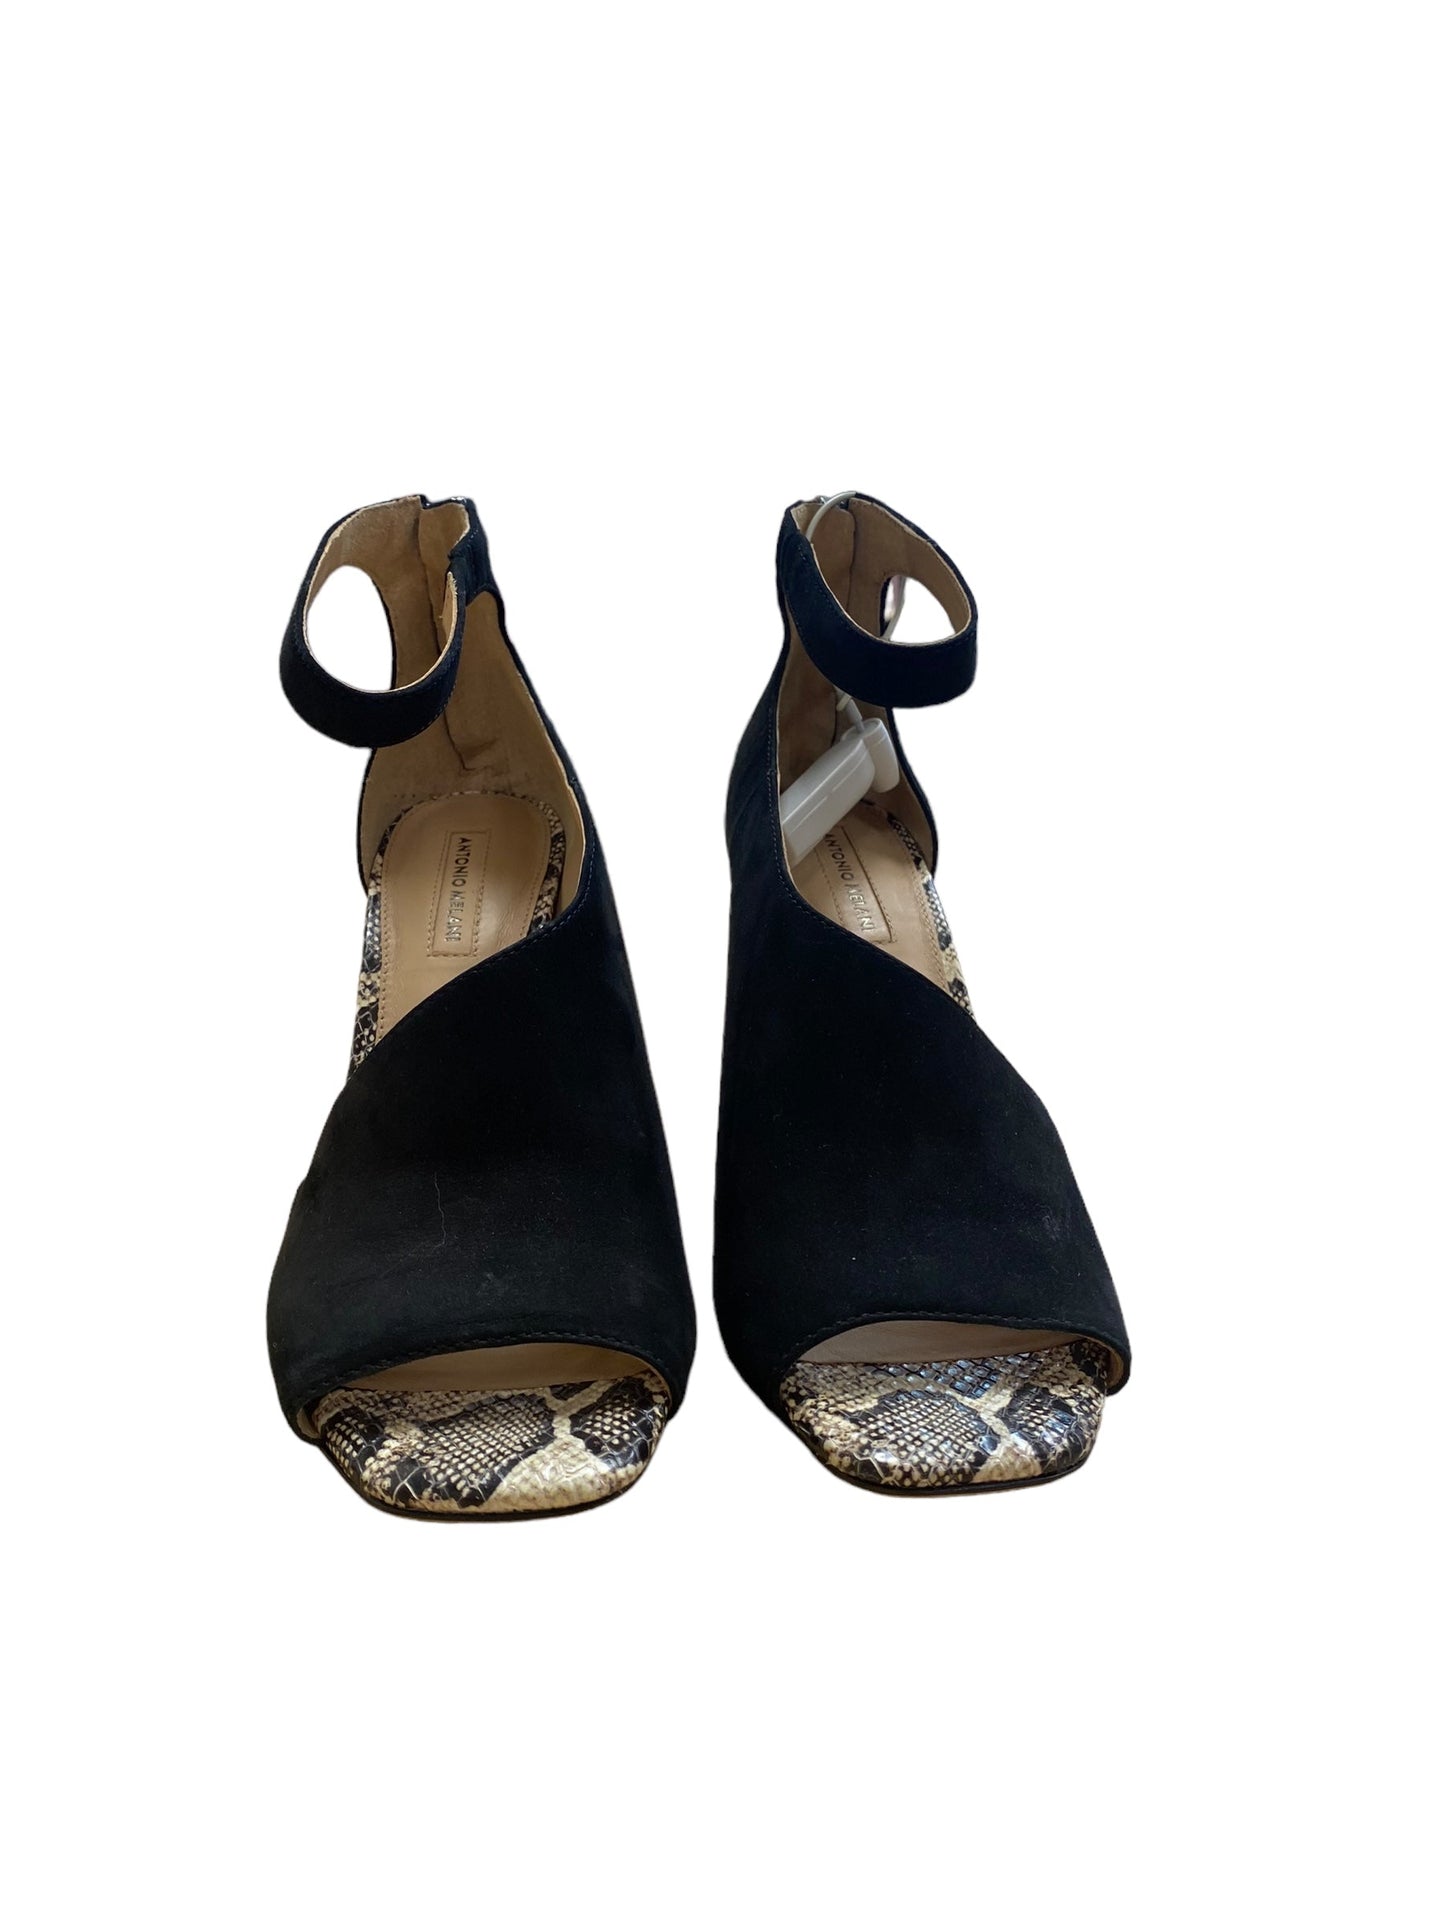 Snakeskin Print Shoes Heels Block Antonio Melani, Size 8